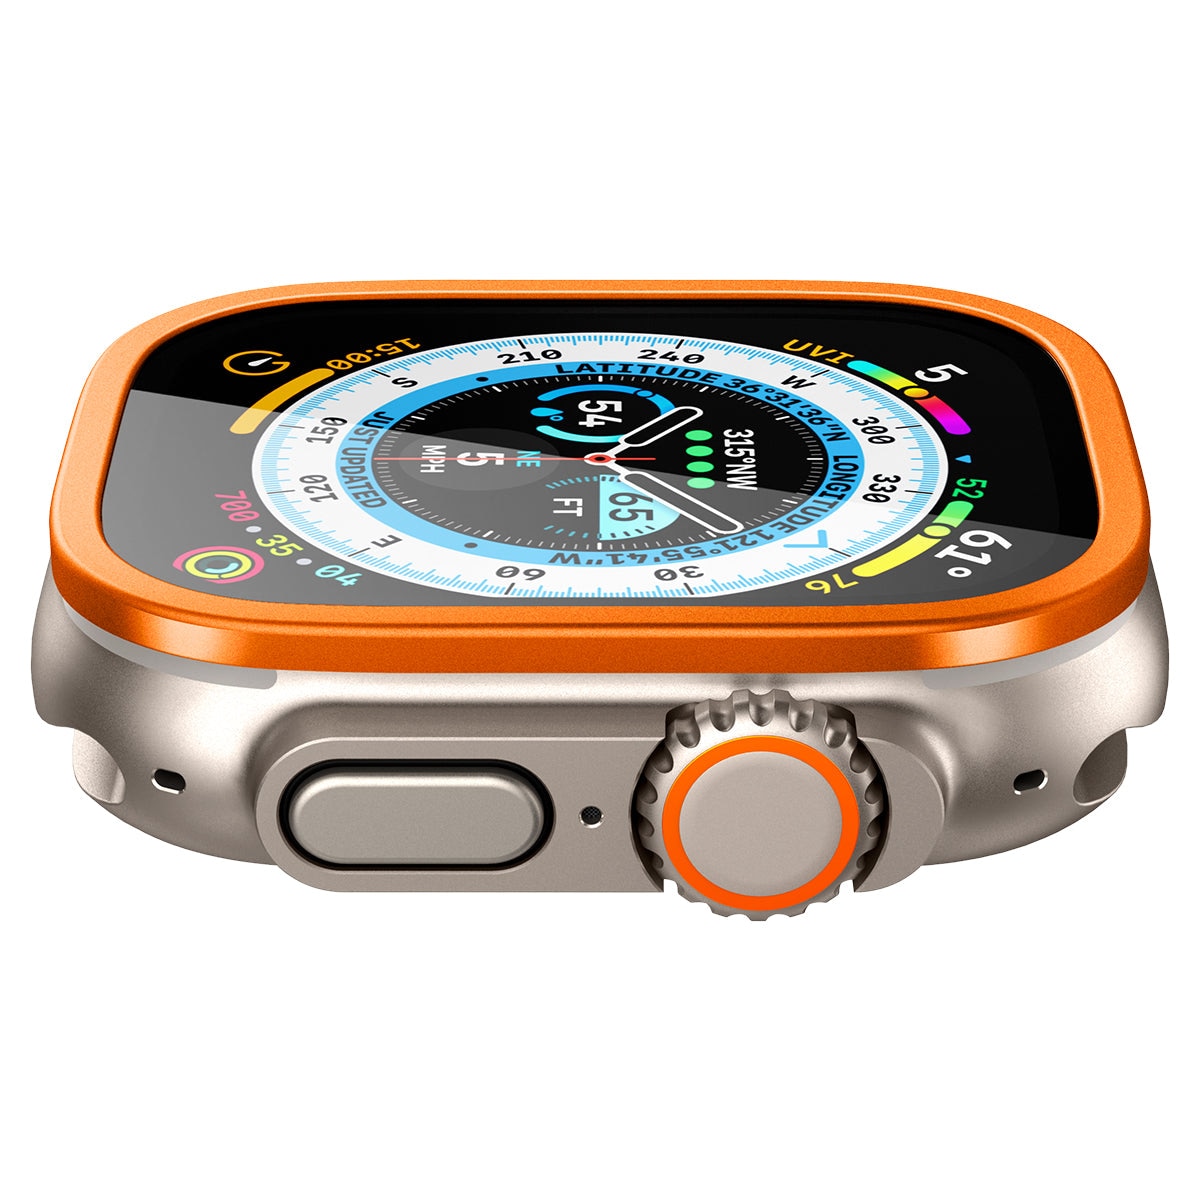 Screen Protector Glas.tR Slim Pro Apple Watch Ultra 49 mm arancia